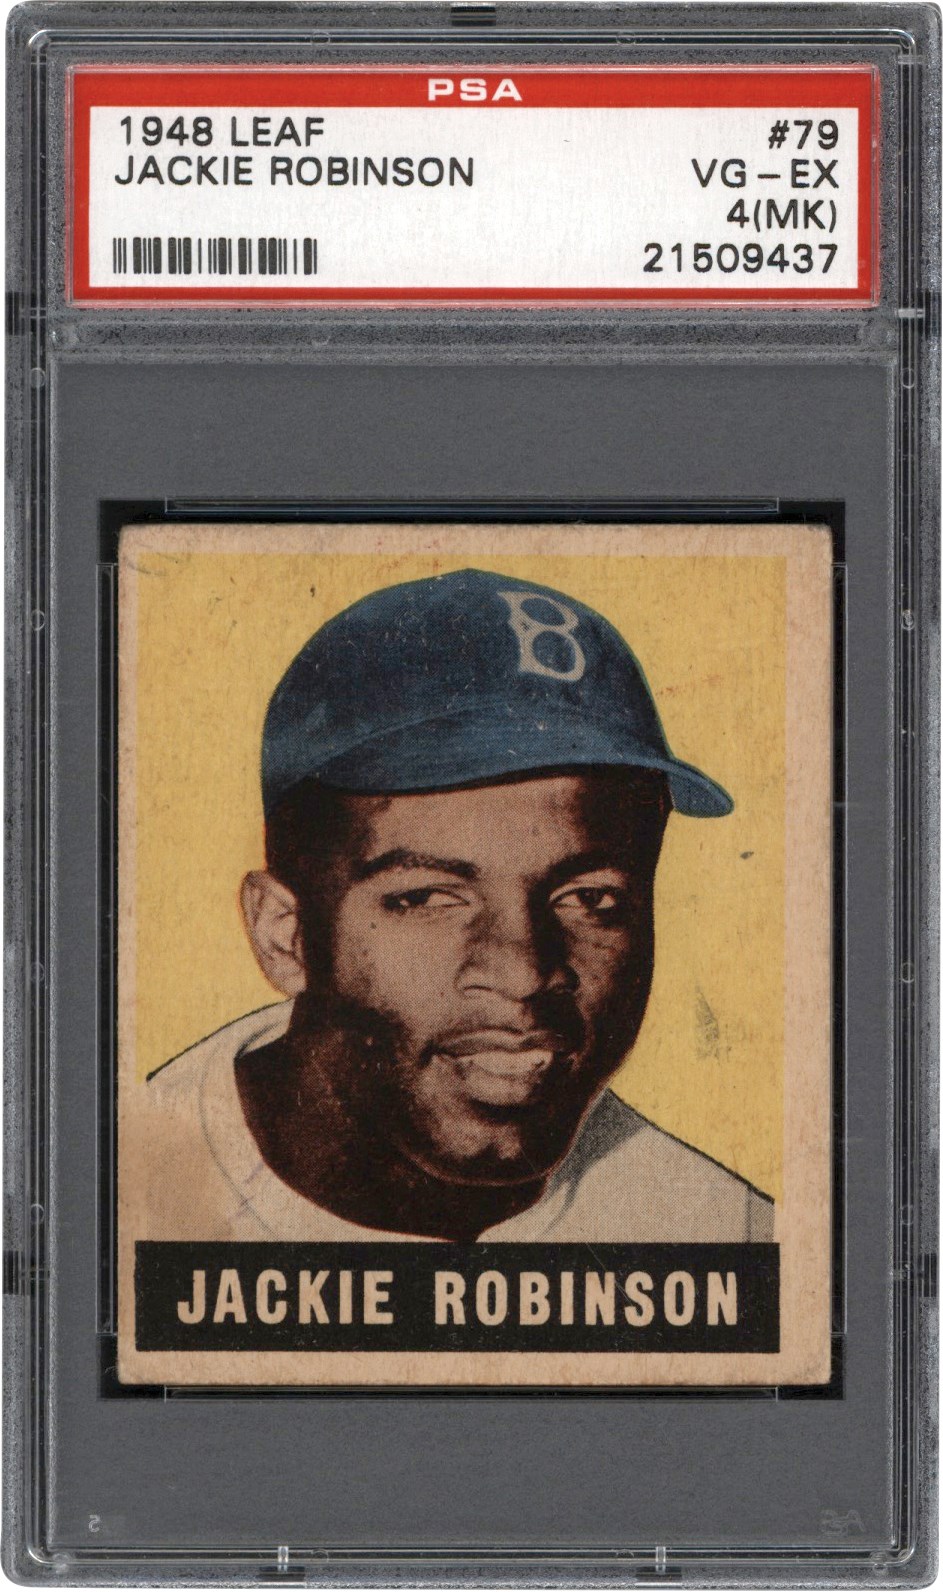 Baseball and Trading Cards - 1948 Leaf #79 Jackie Robinson Rookie Card PSA VG-EX 4 (MK)